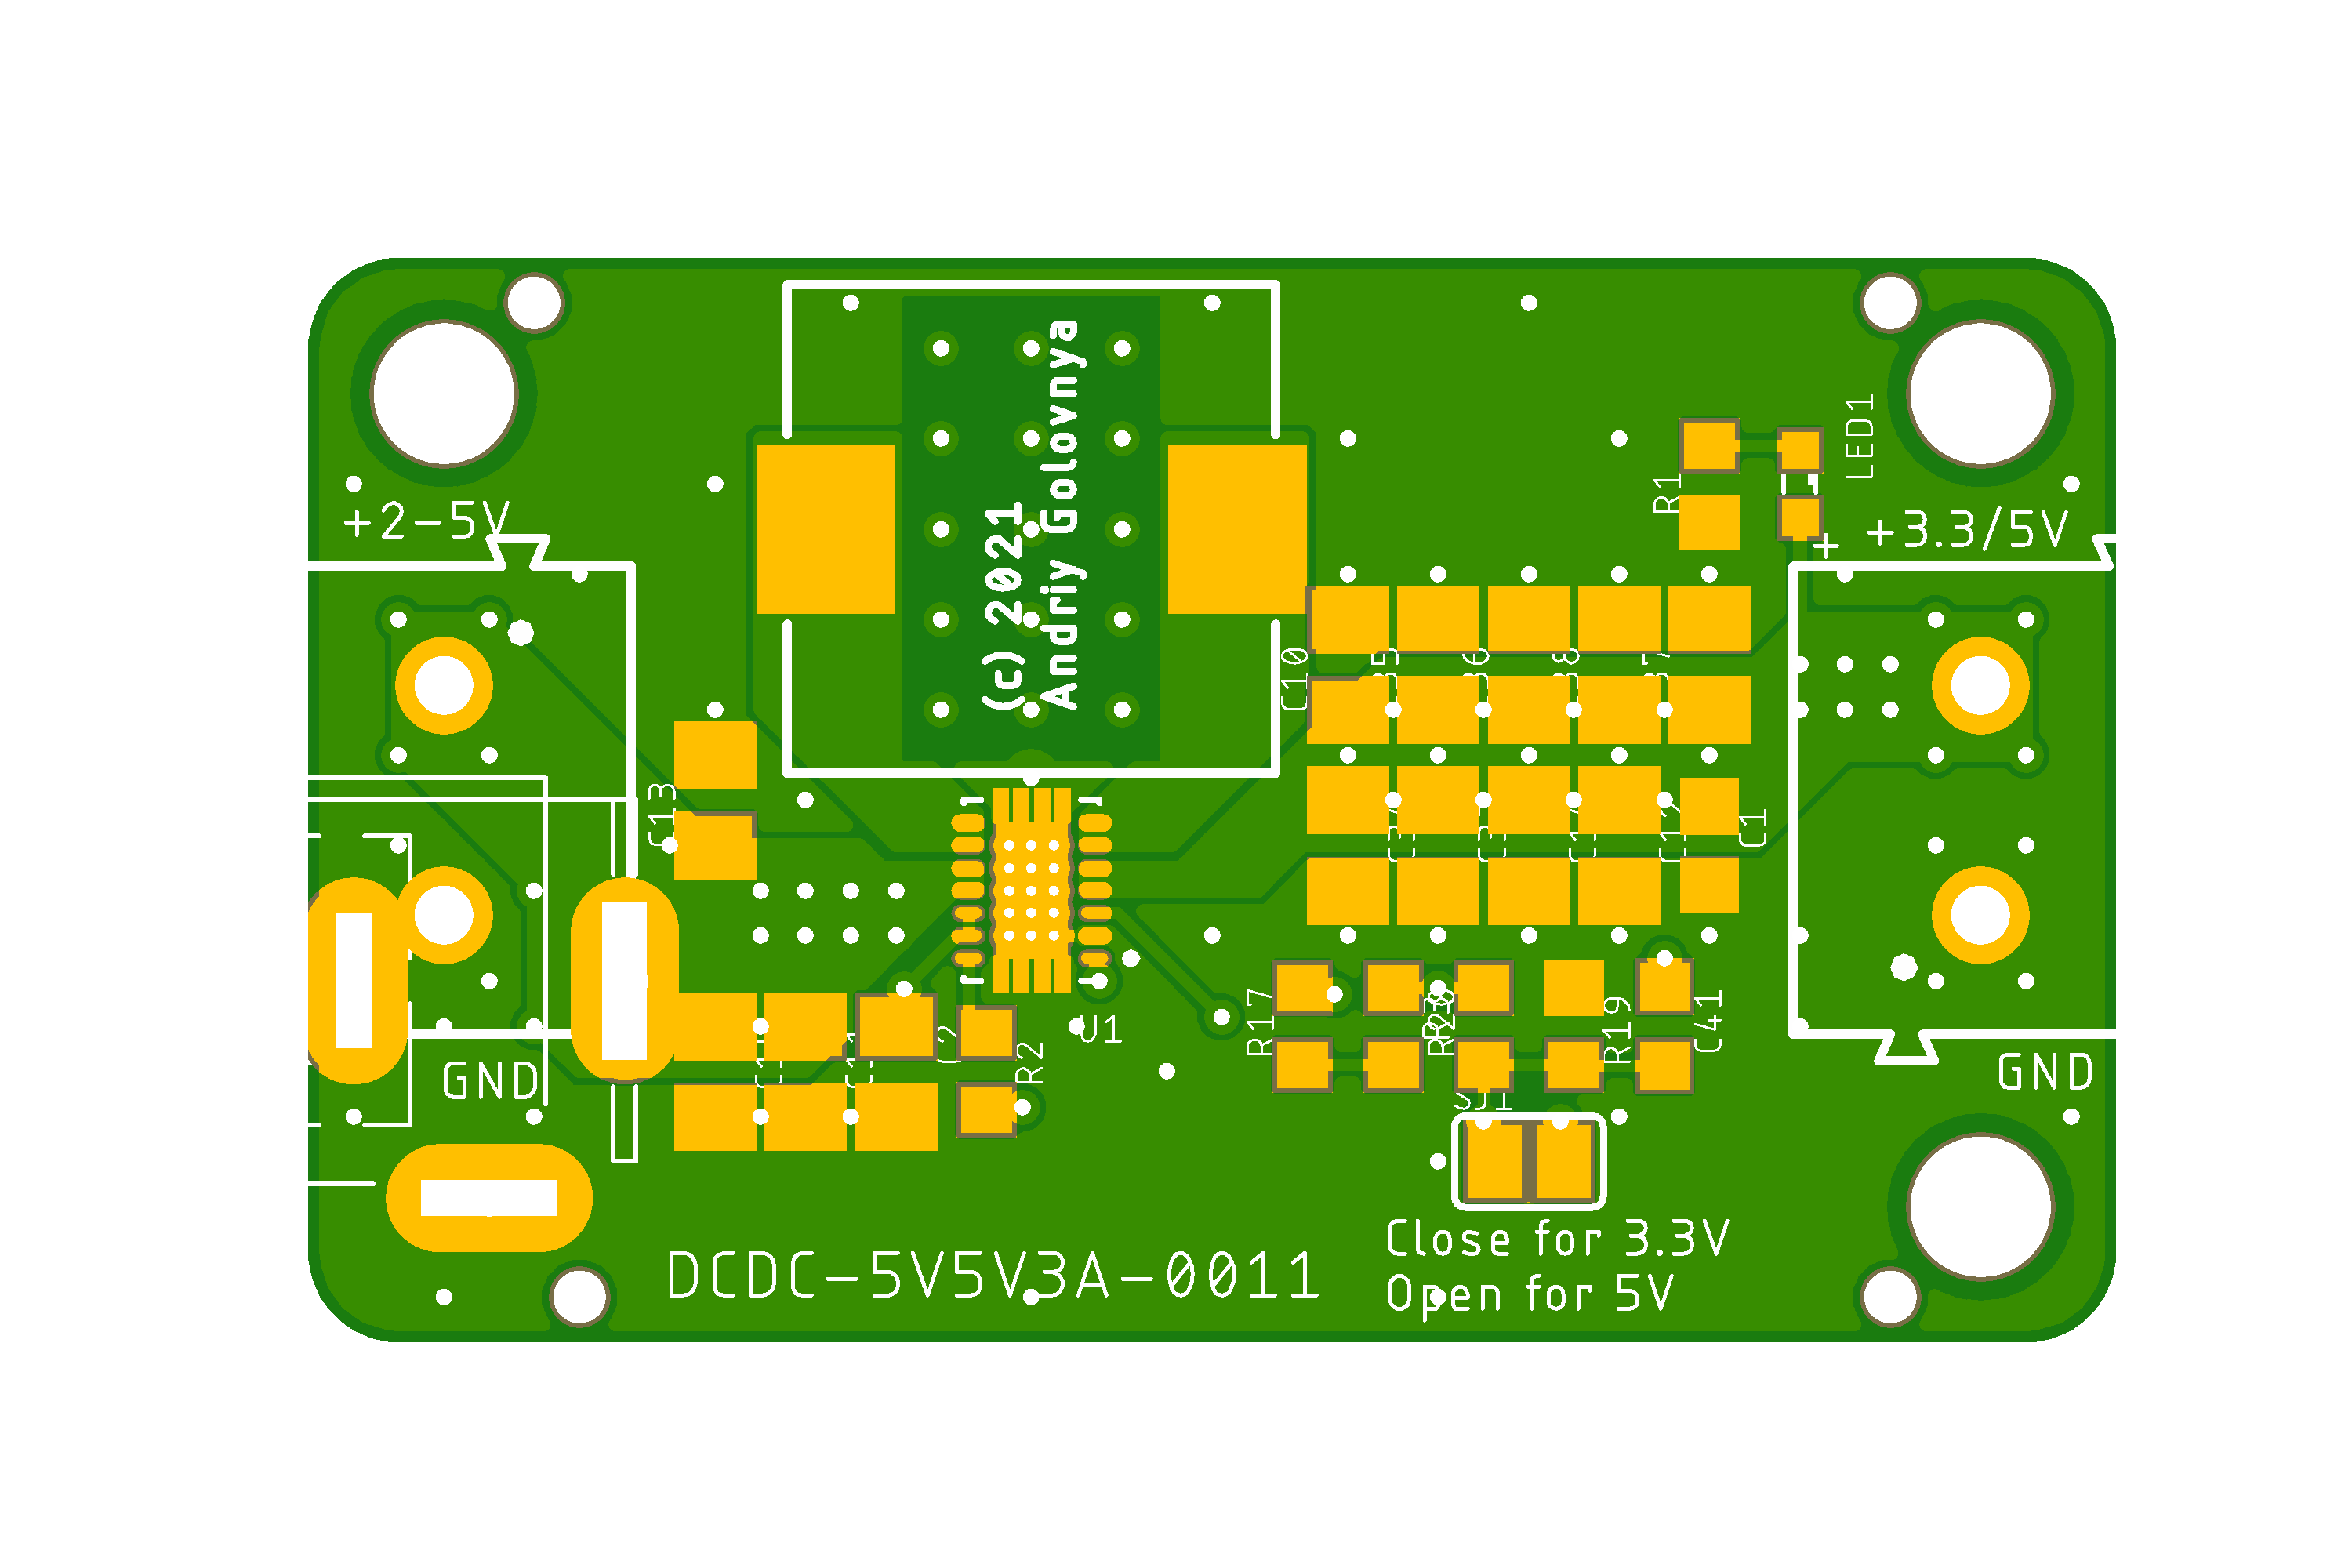 DCDC-5V5V3A preview